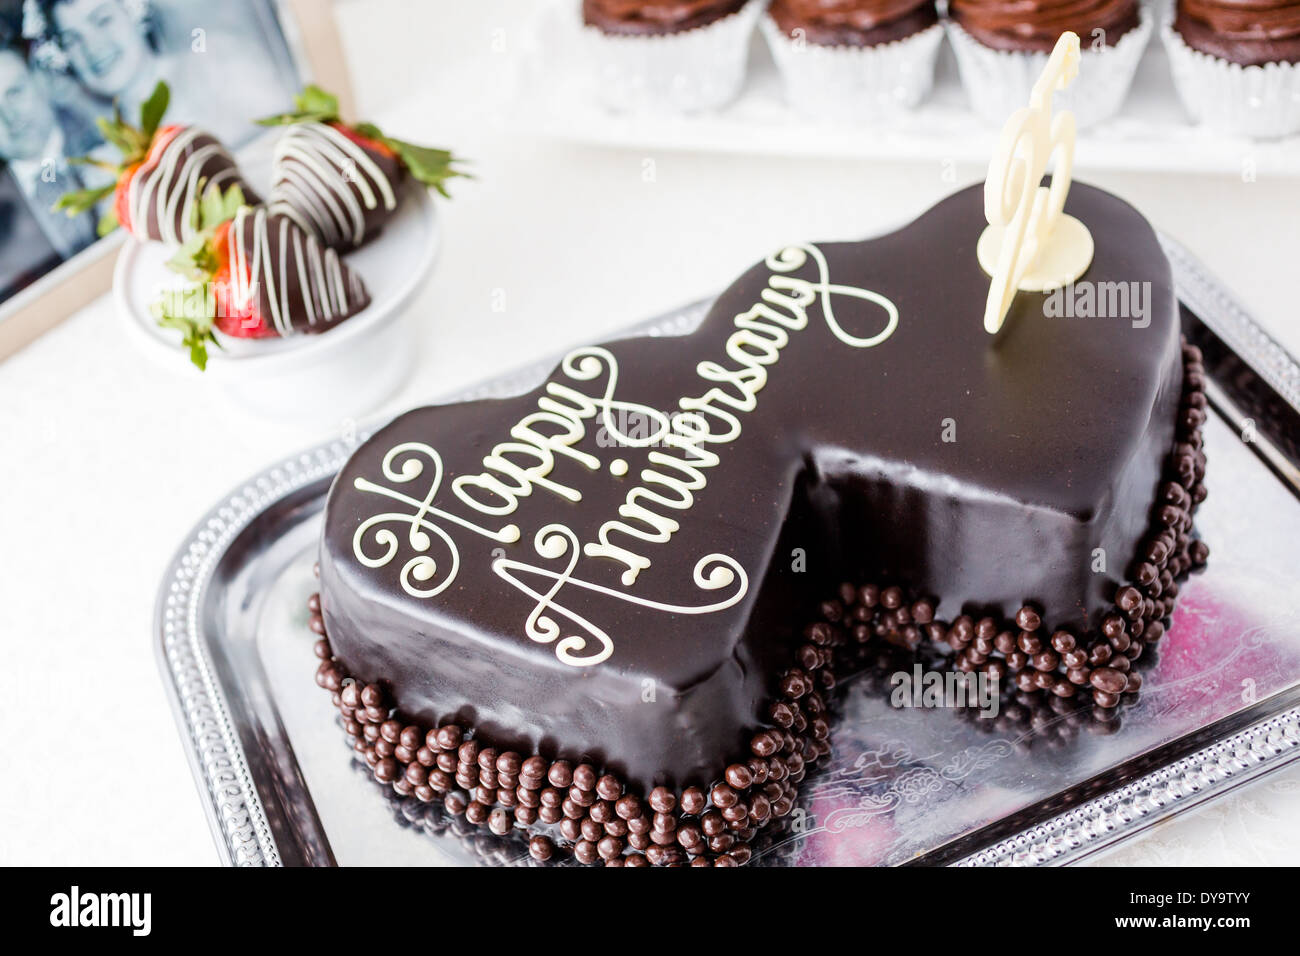 Celebrating wedding anniversary with heart shape chocolate cake ...